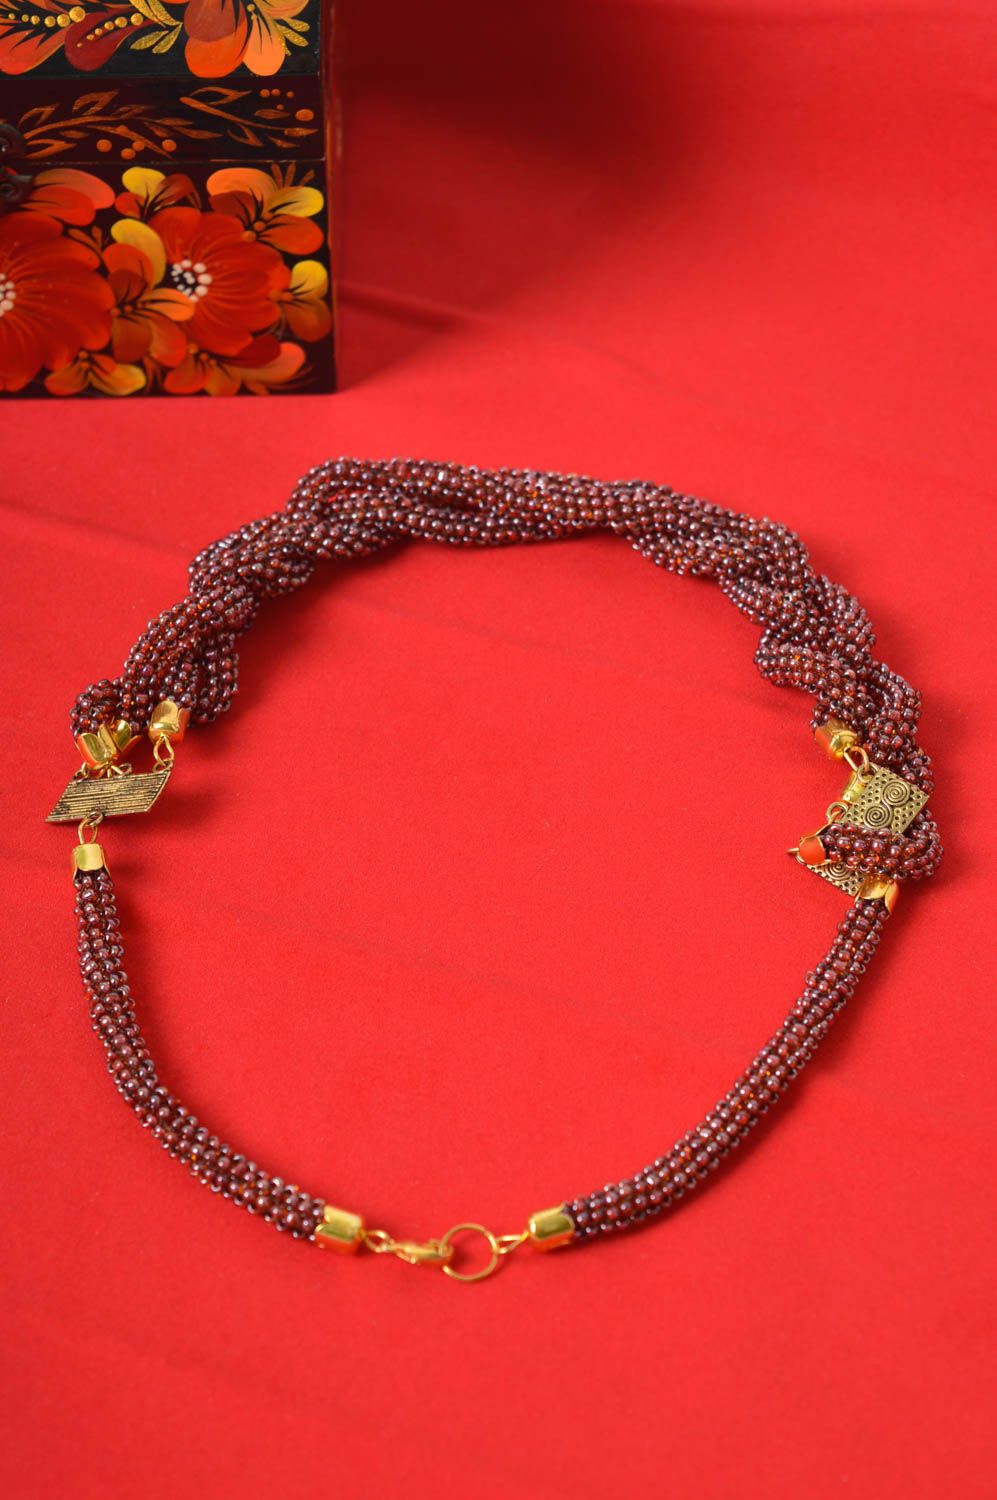 Exclusive beaded necklace handmade jewelry fashion jewelry seed beads jewelry photo 1